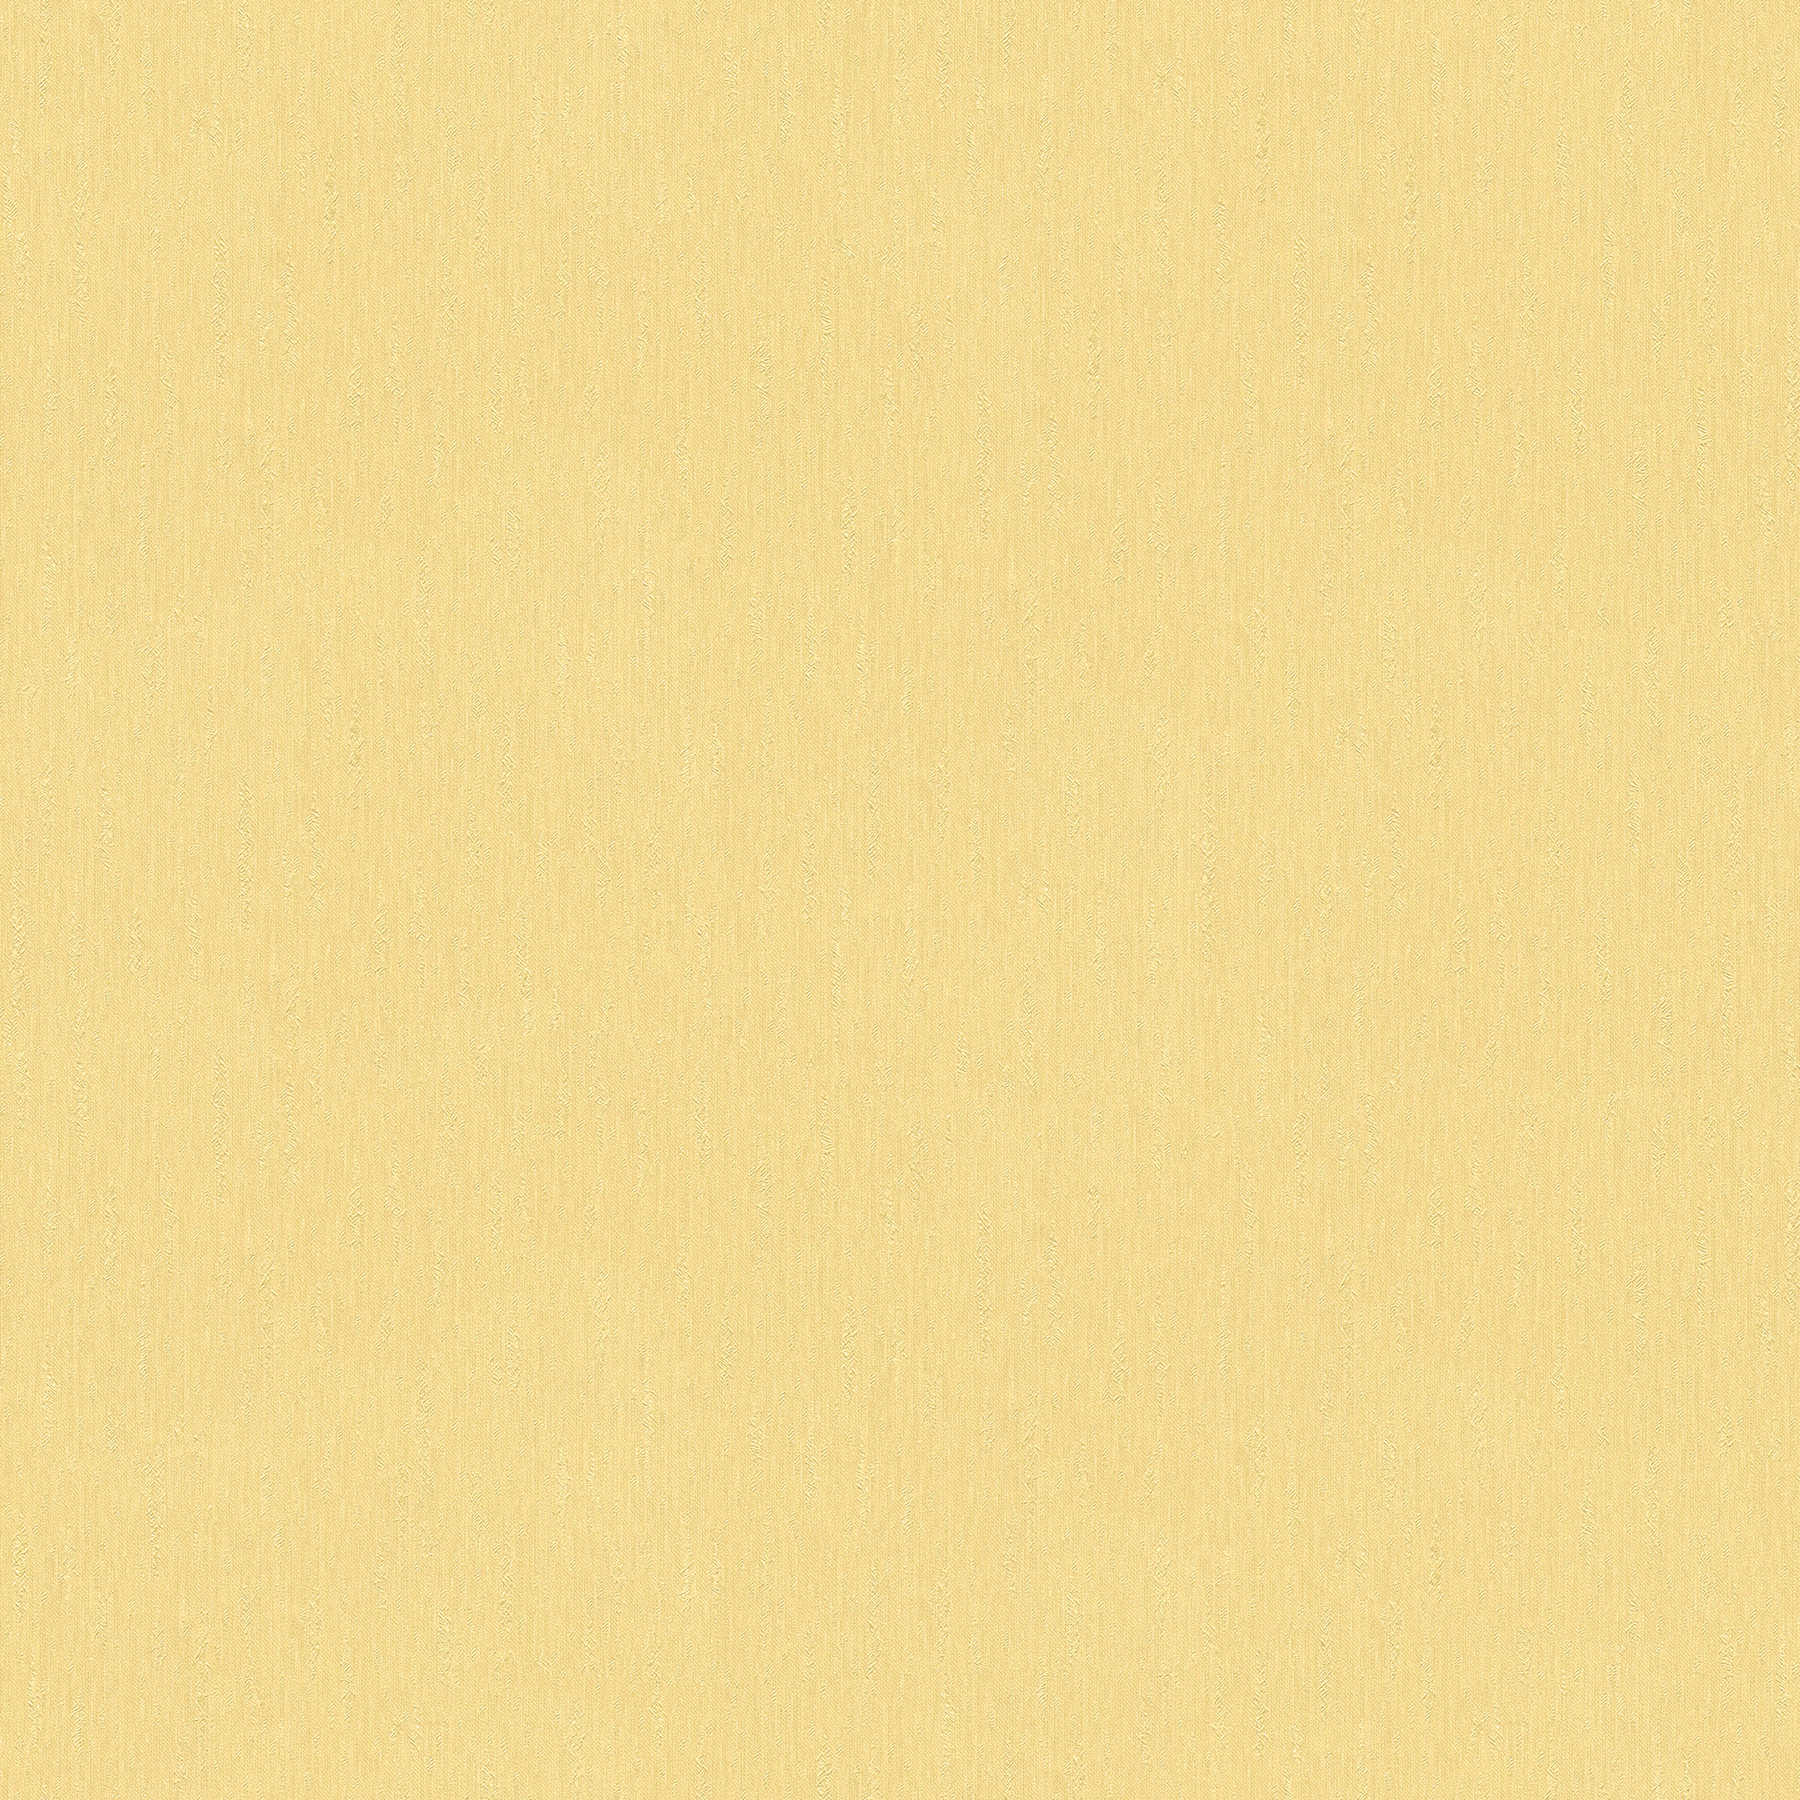 Top 999+ Plain Yellow Wallpaper Full HD, 4K✓Free to Use